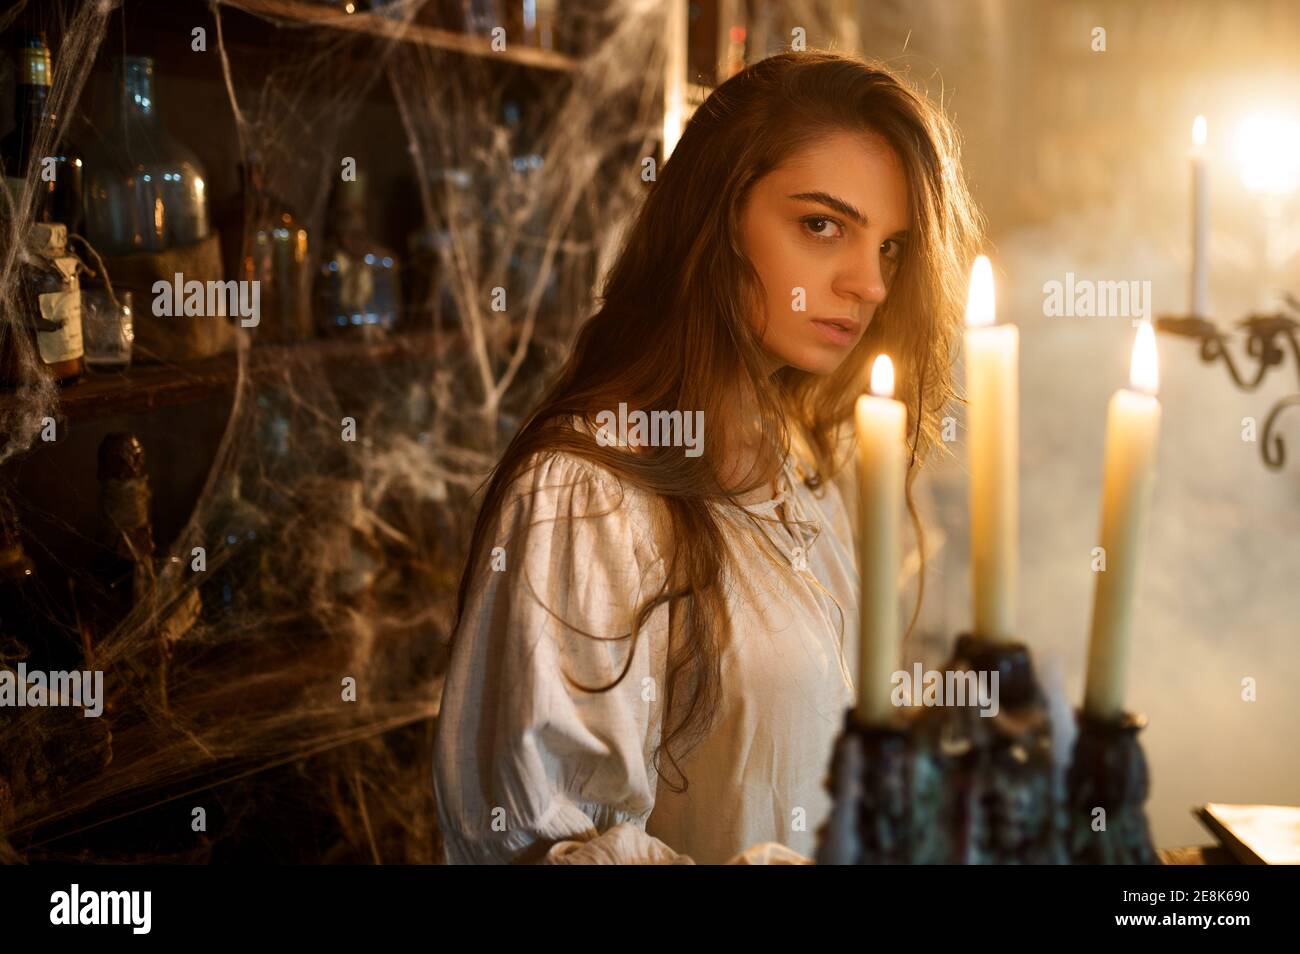 Crazy demonic woman near the shelf with potions Stock Photo